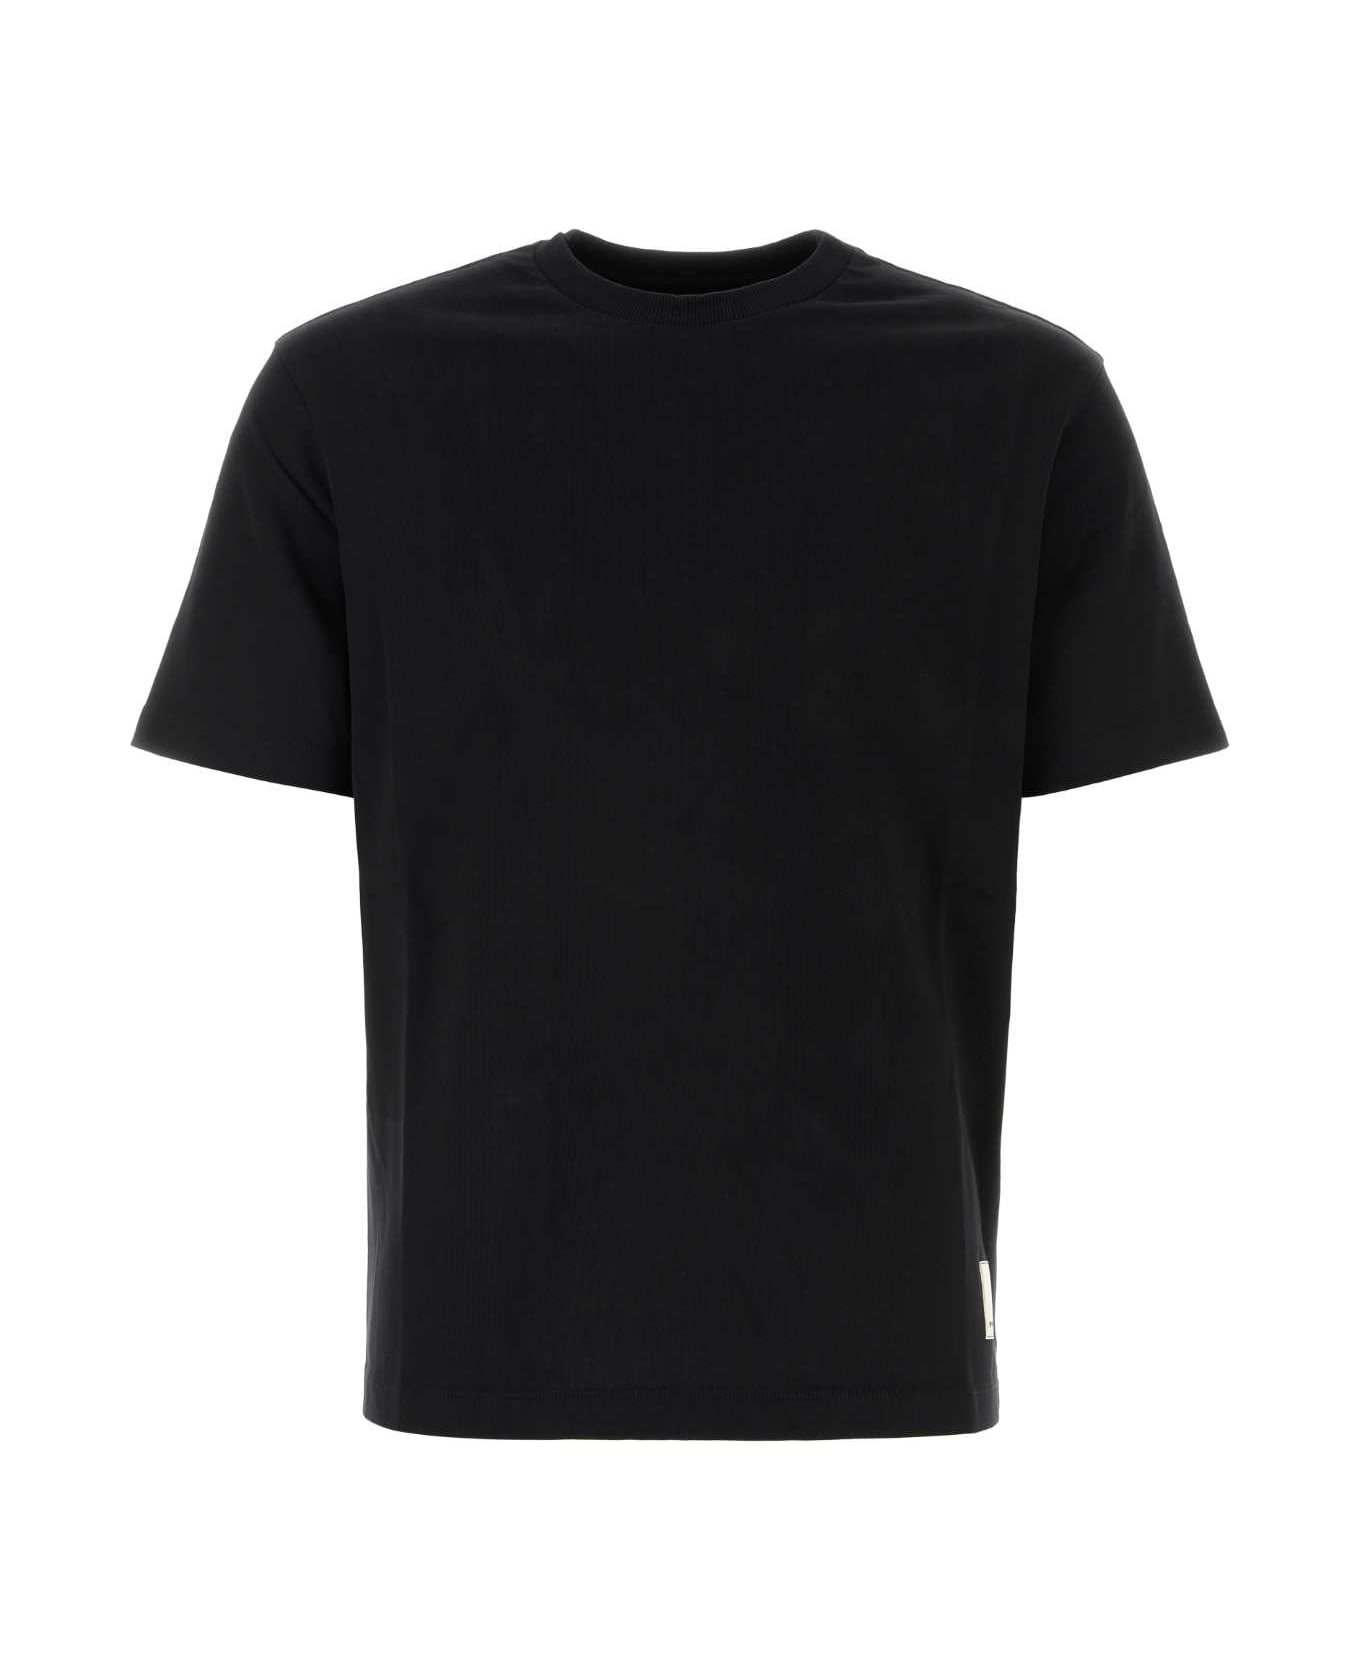 Emporio Armani Black Cotton T-shirt - 0095